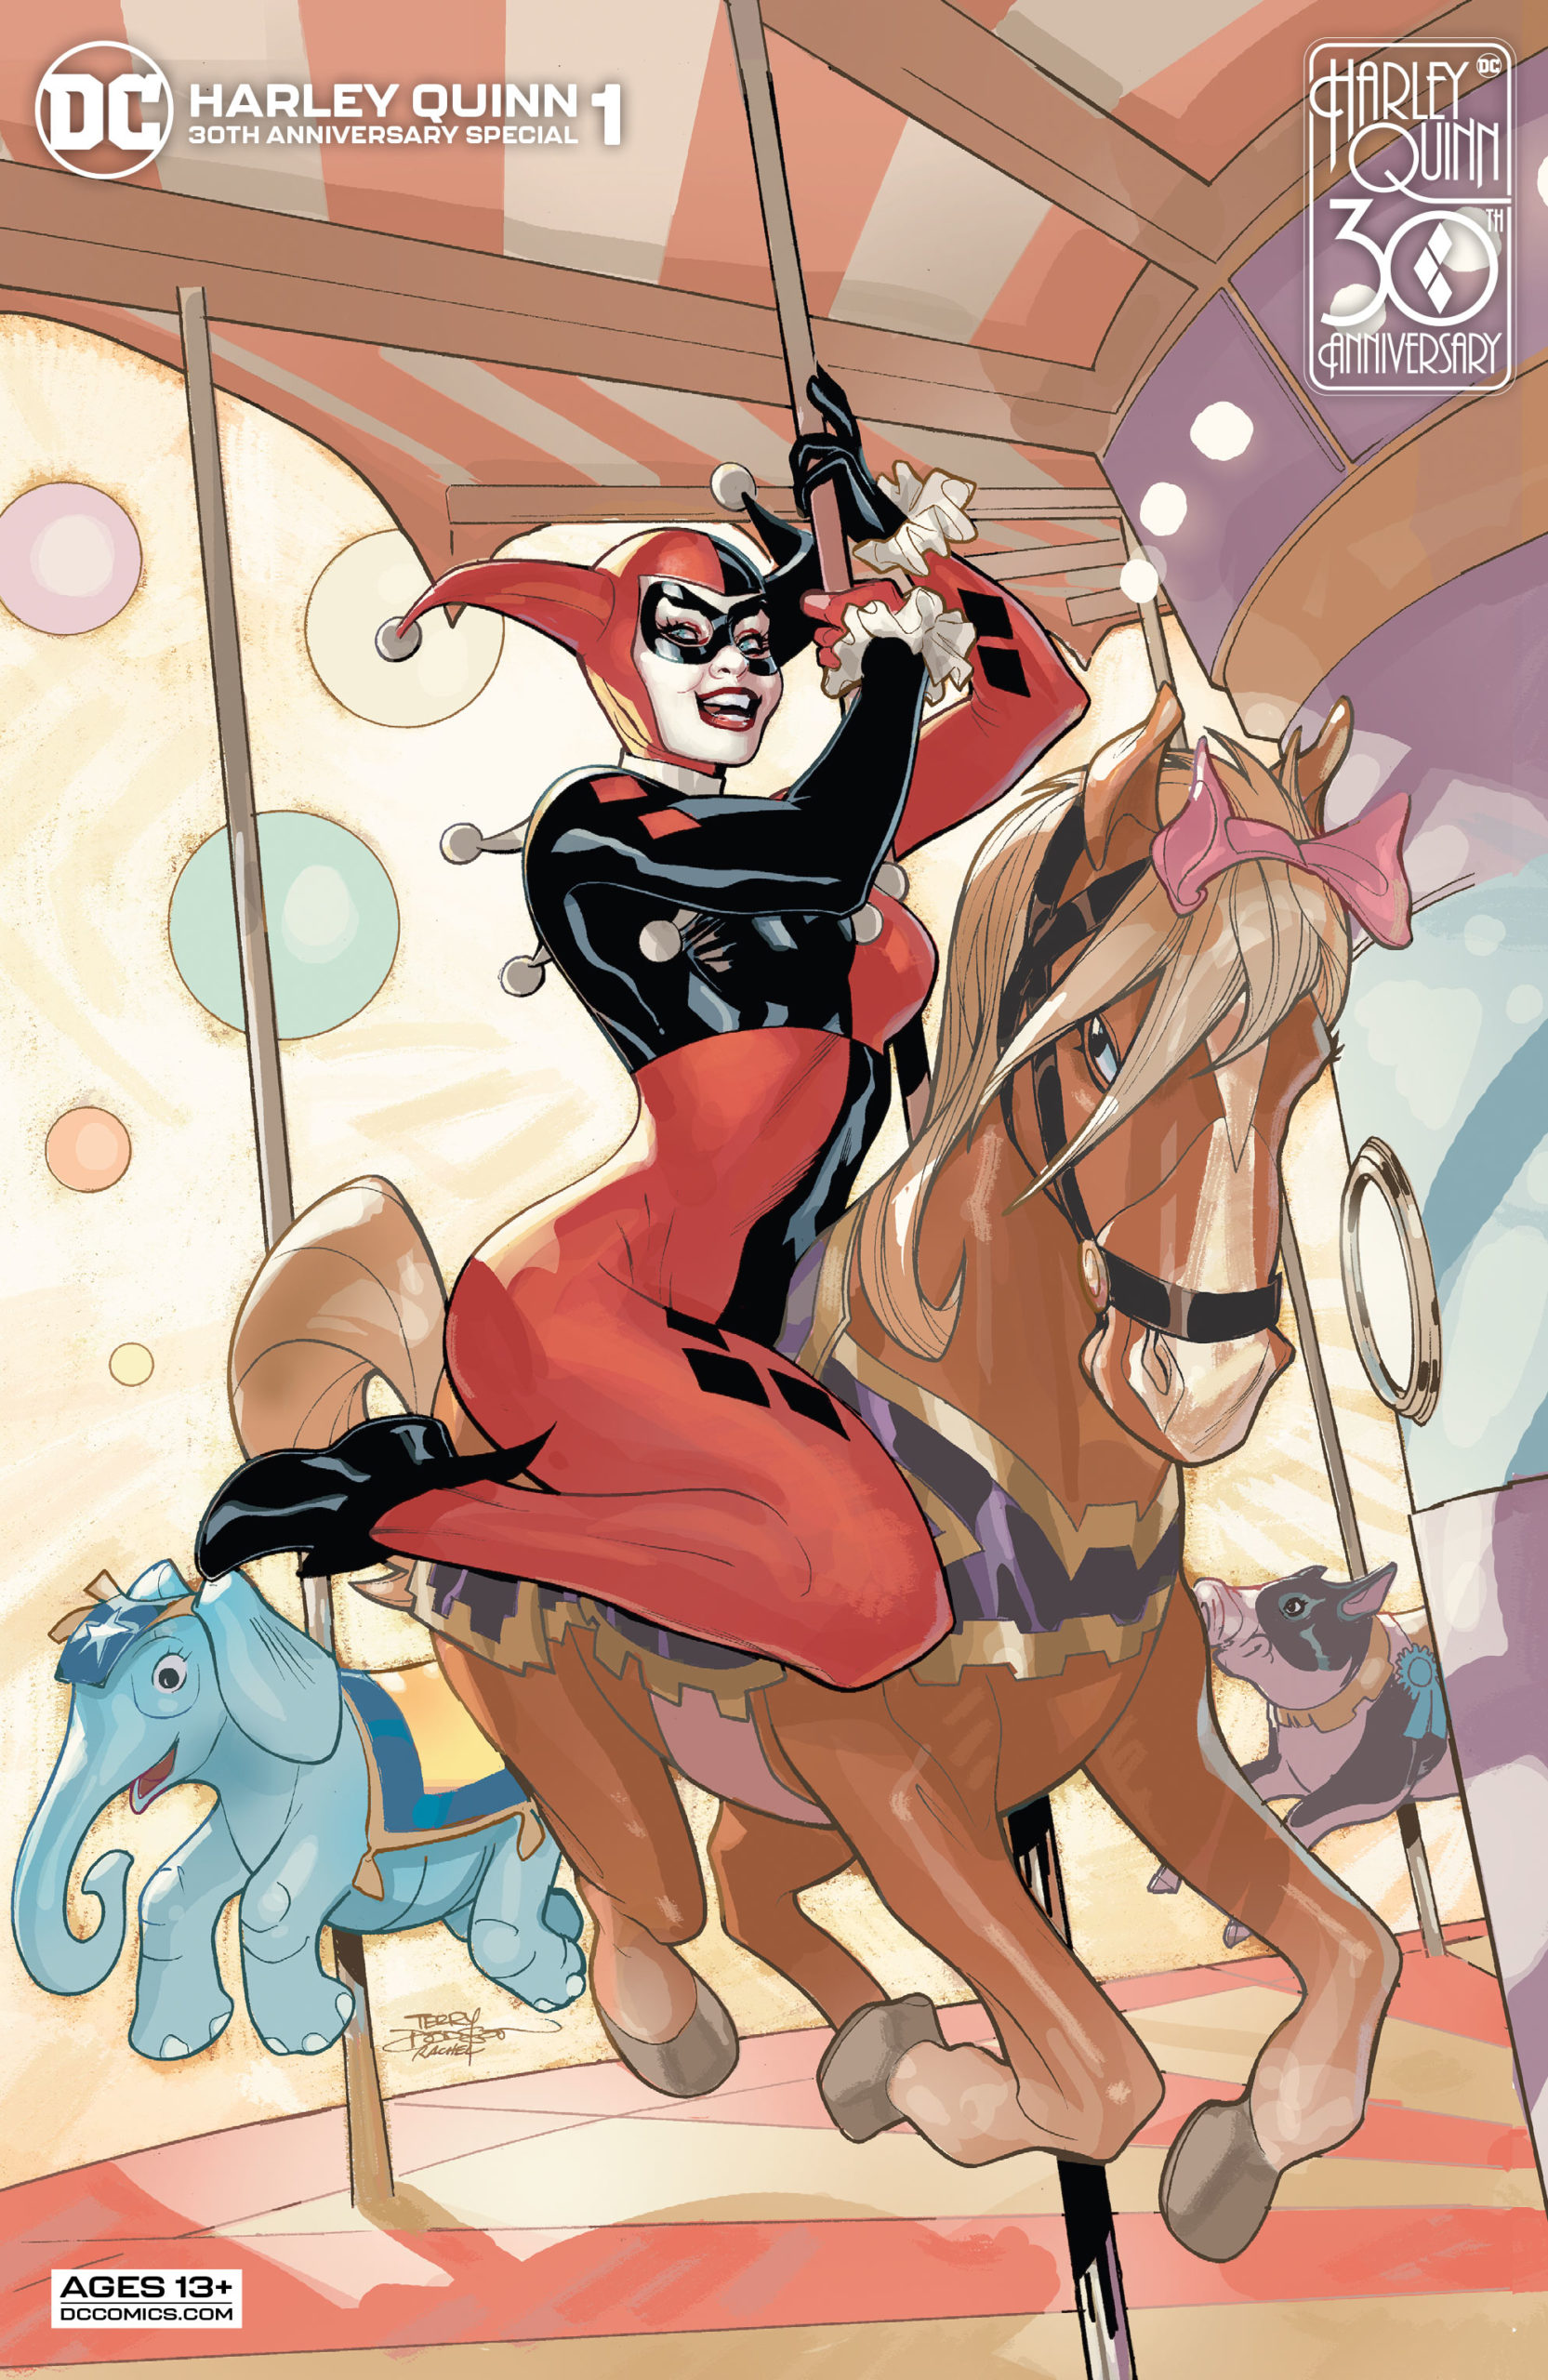 Harley Quinn: 30th Anniversary Special #1